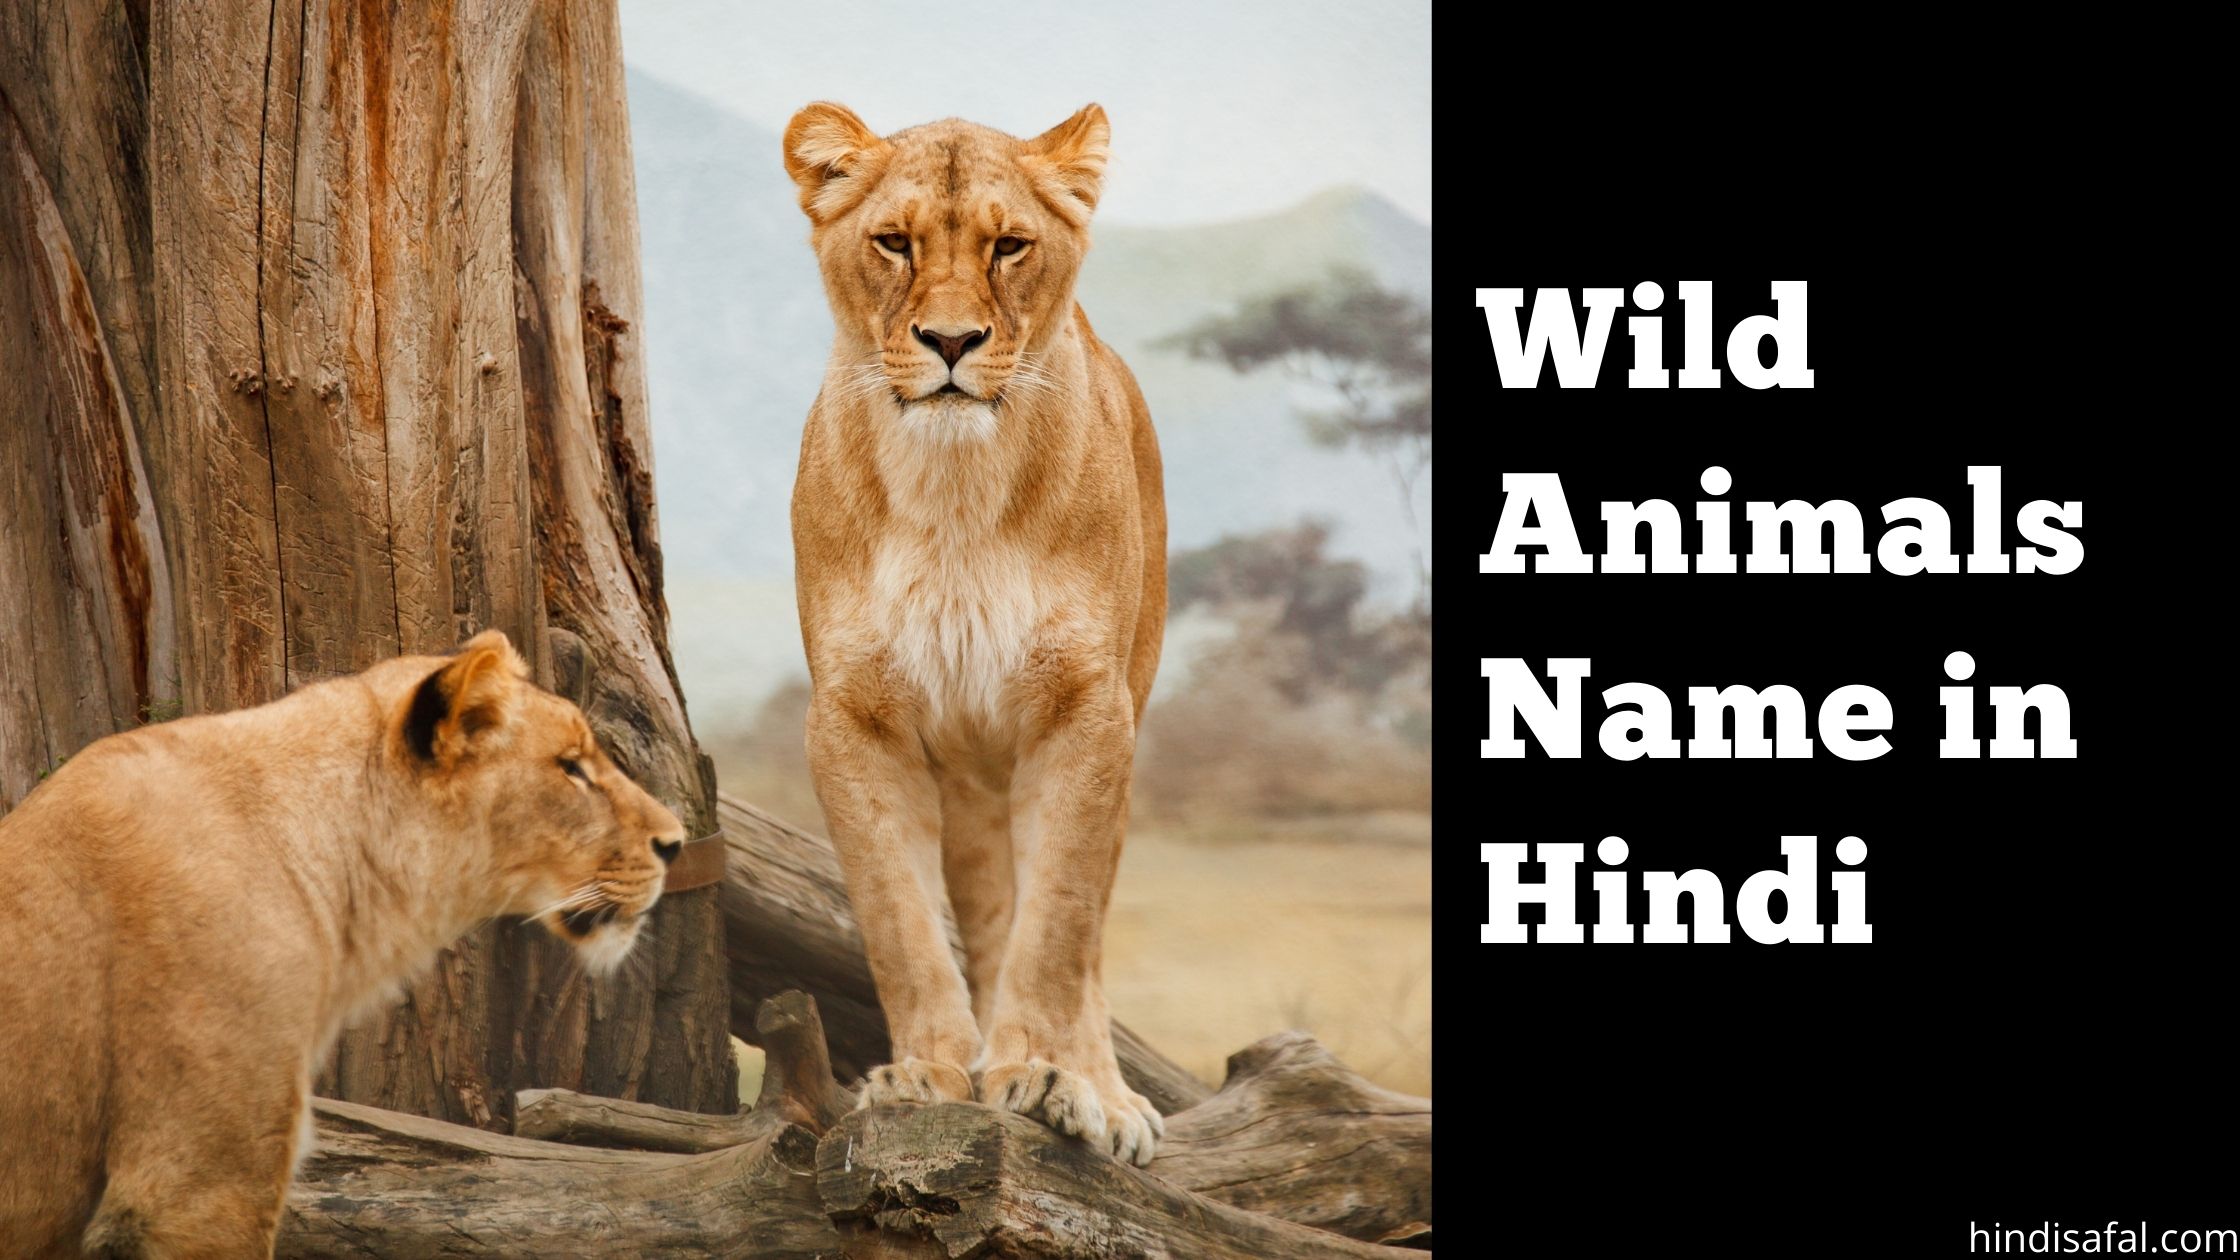 Wild Animals Name in Hindi